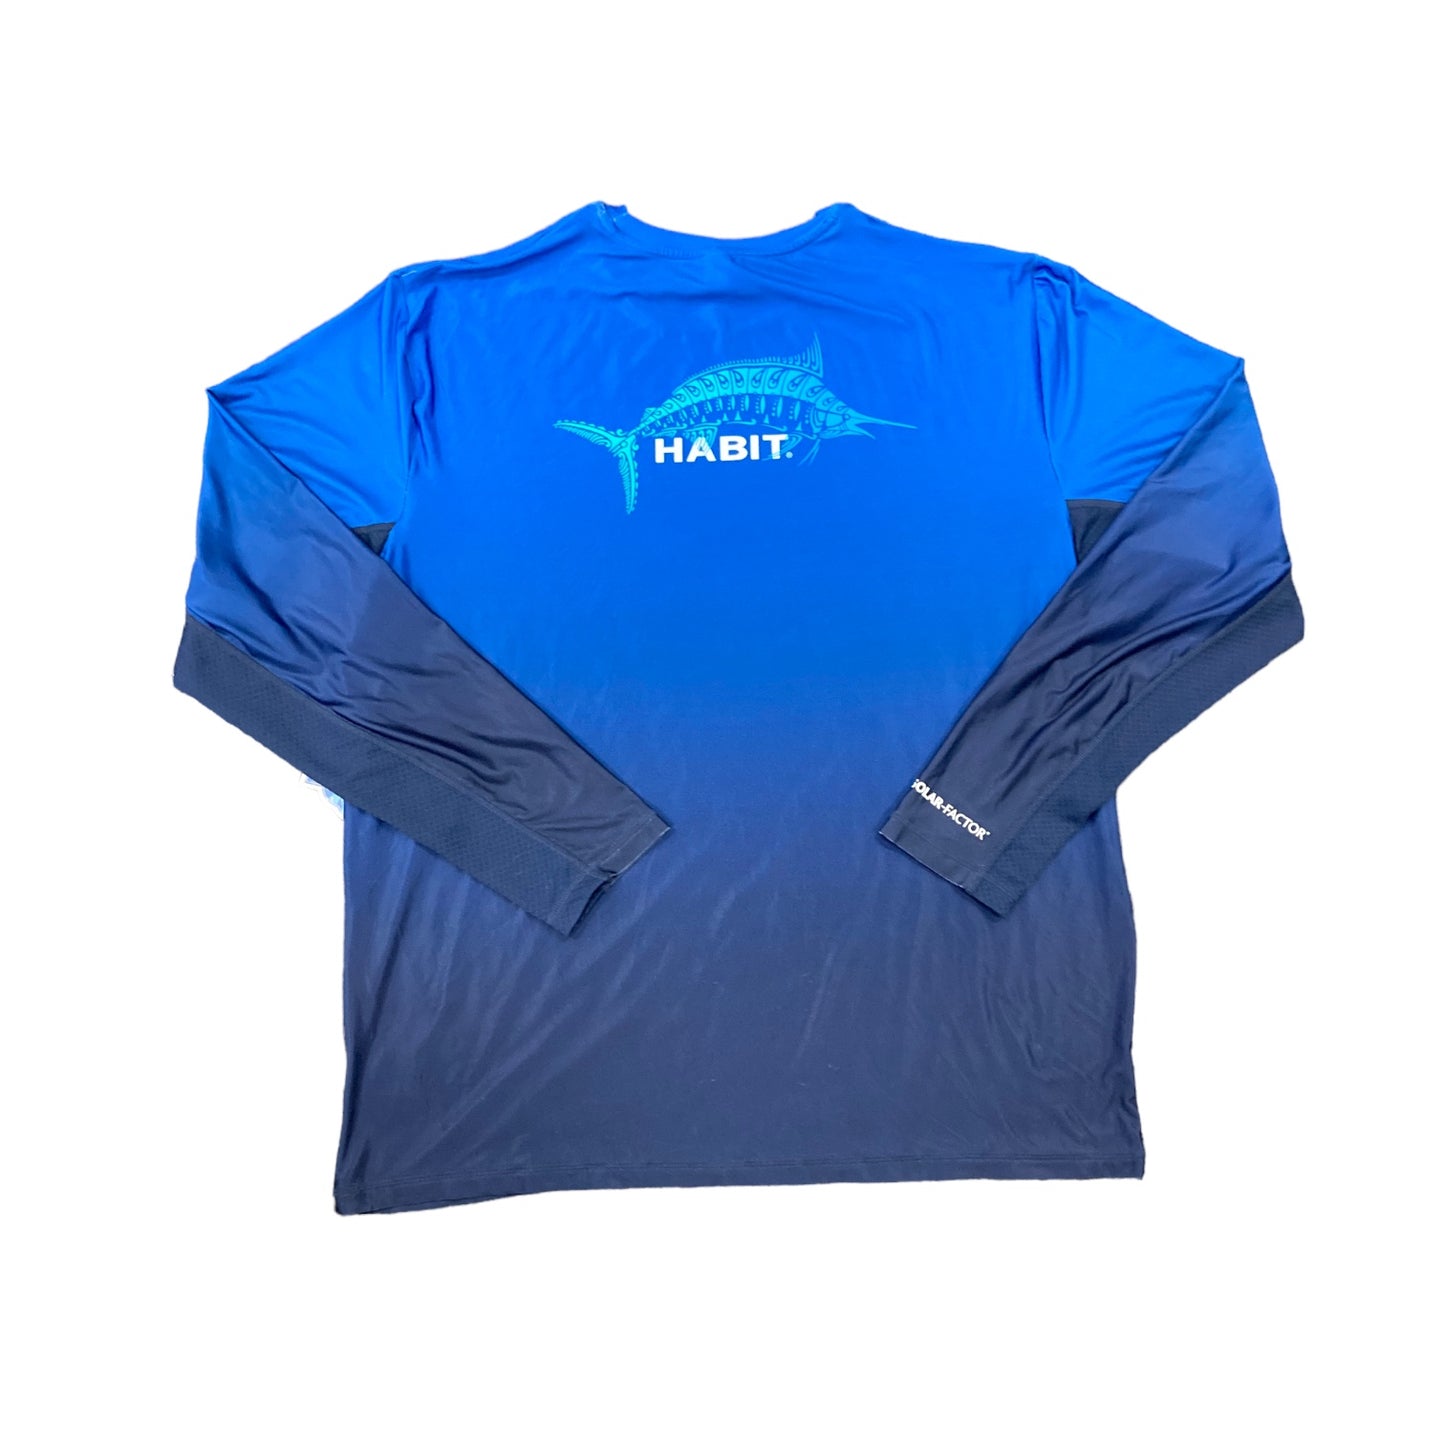 Habit Men's Mariana Inlet Long Sleeve Performance Shirt